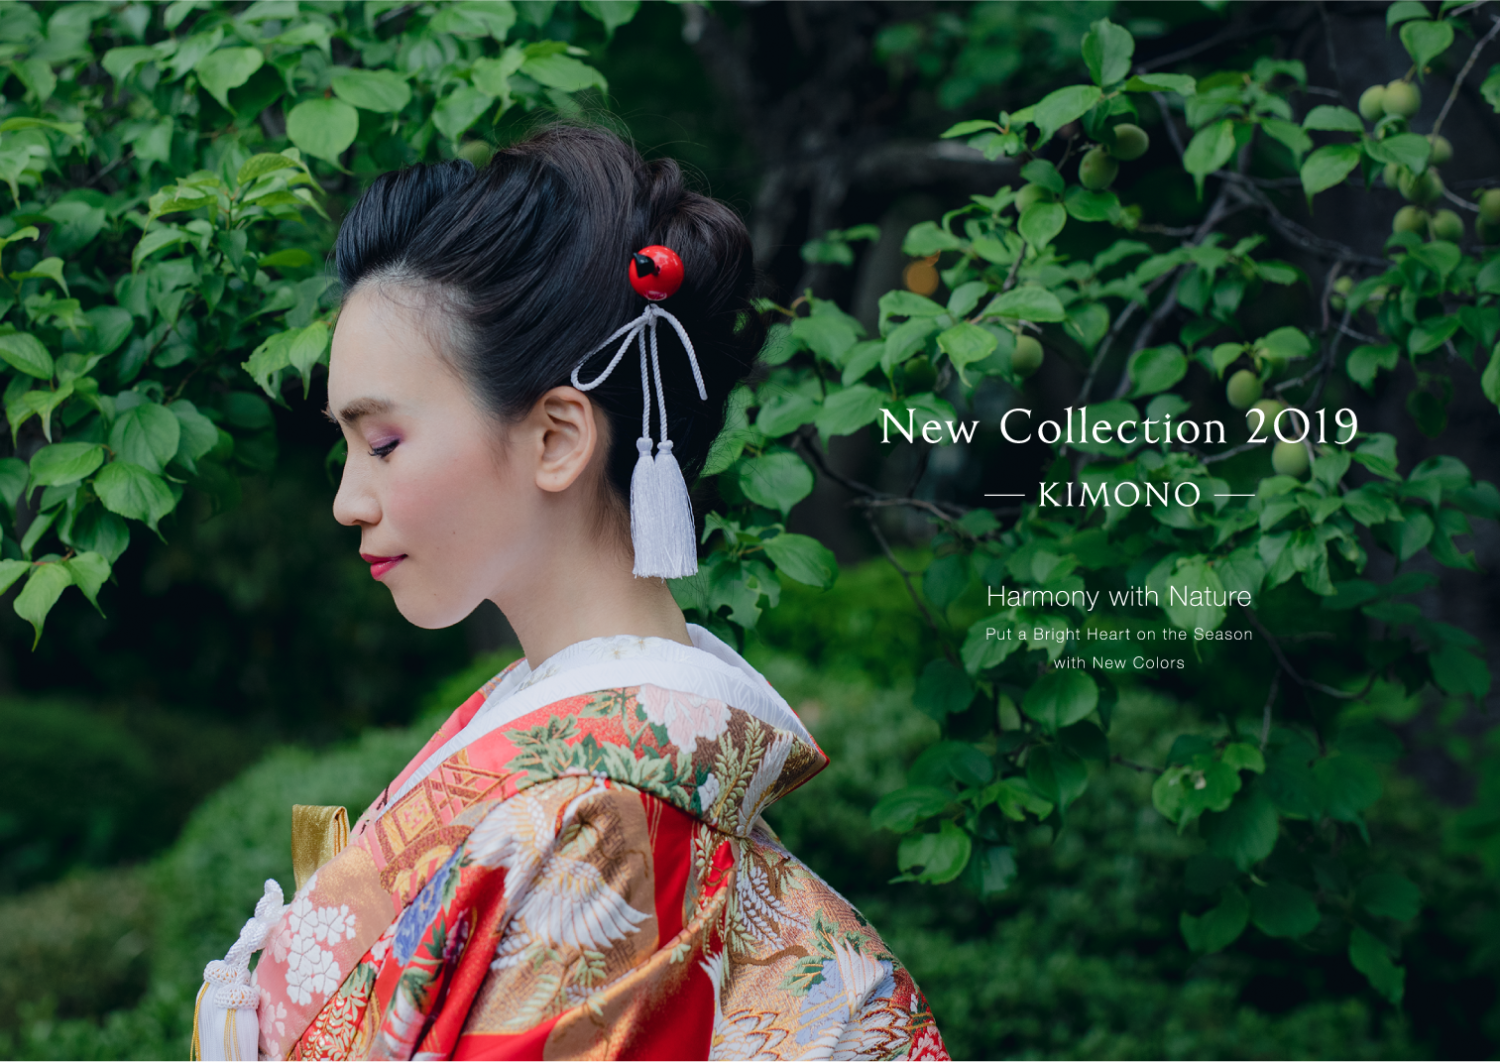 「New Collection 2019 KIMONO」リリースしました。